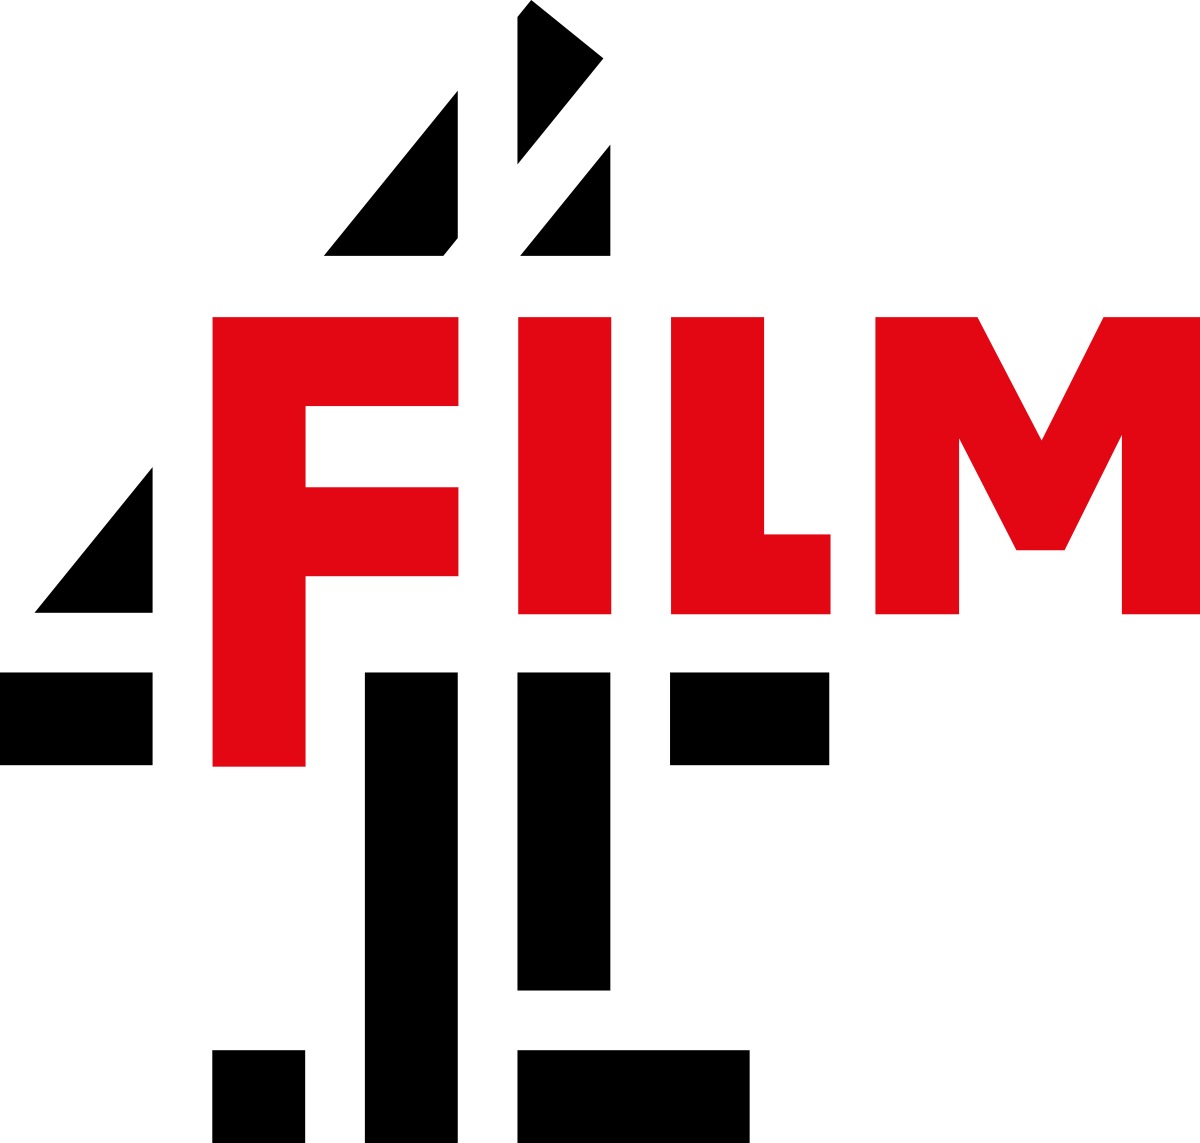 Channel Four Films Logo